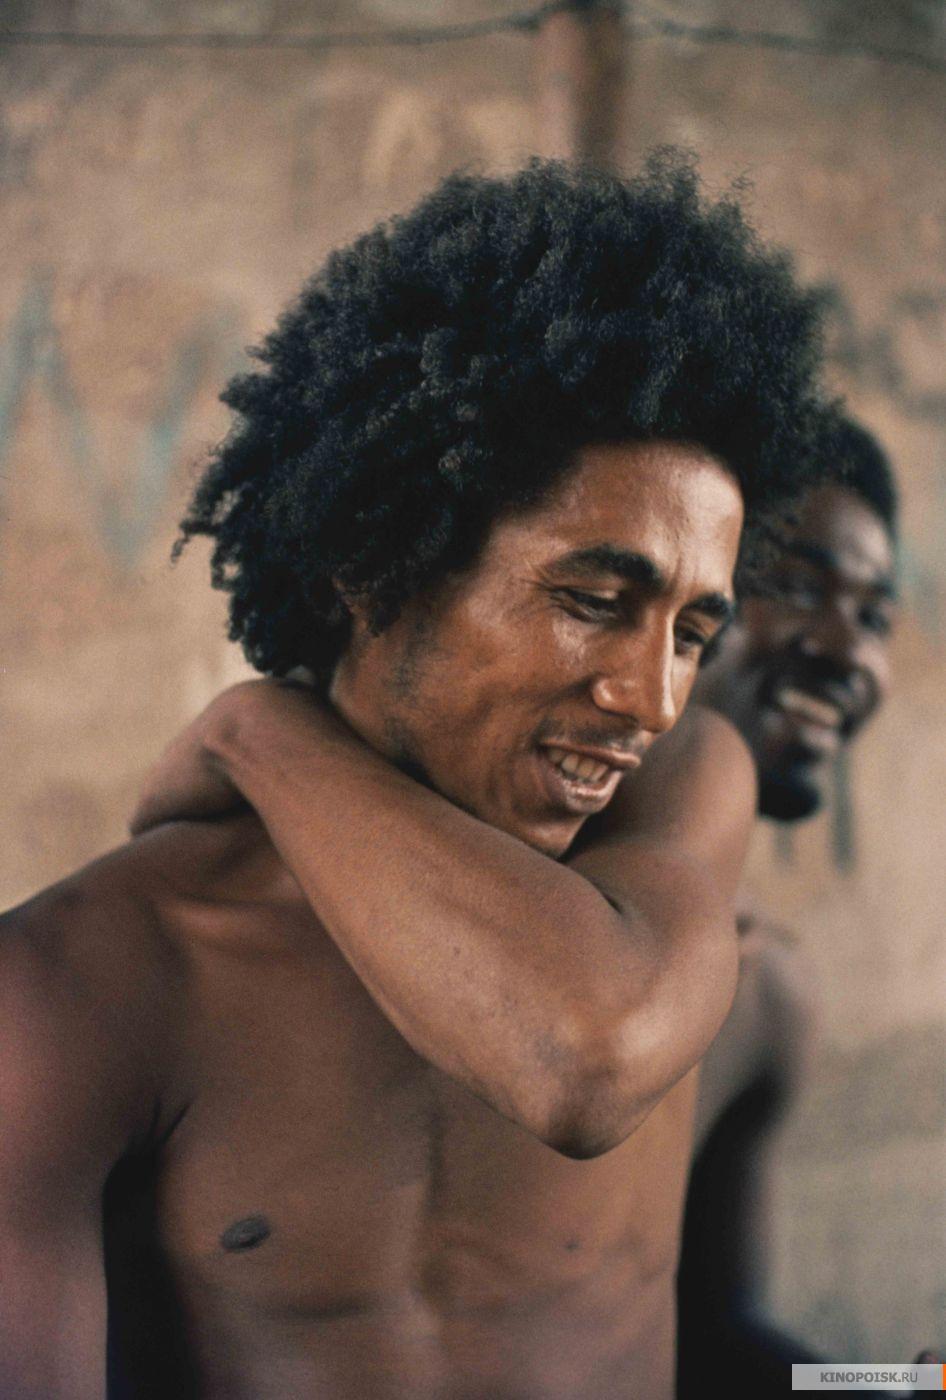 Photo №18206 Bob Marley.